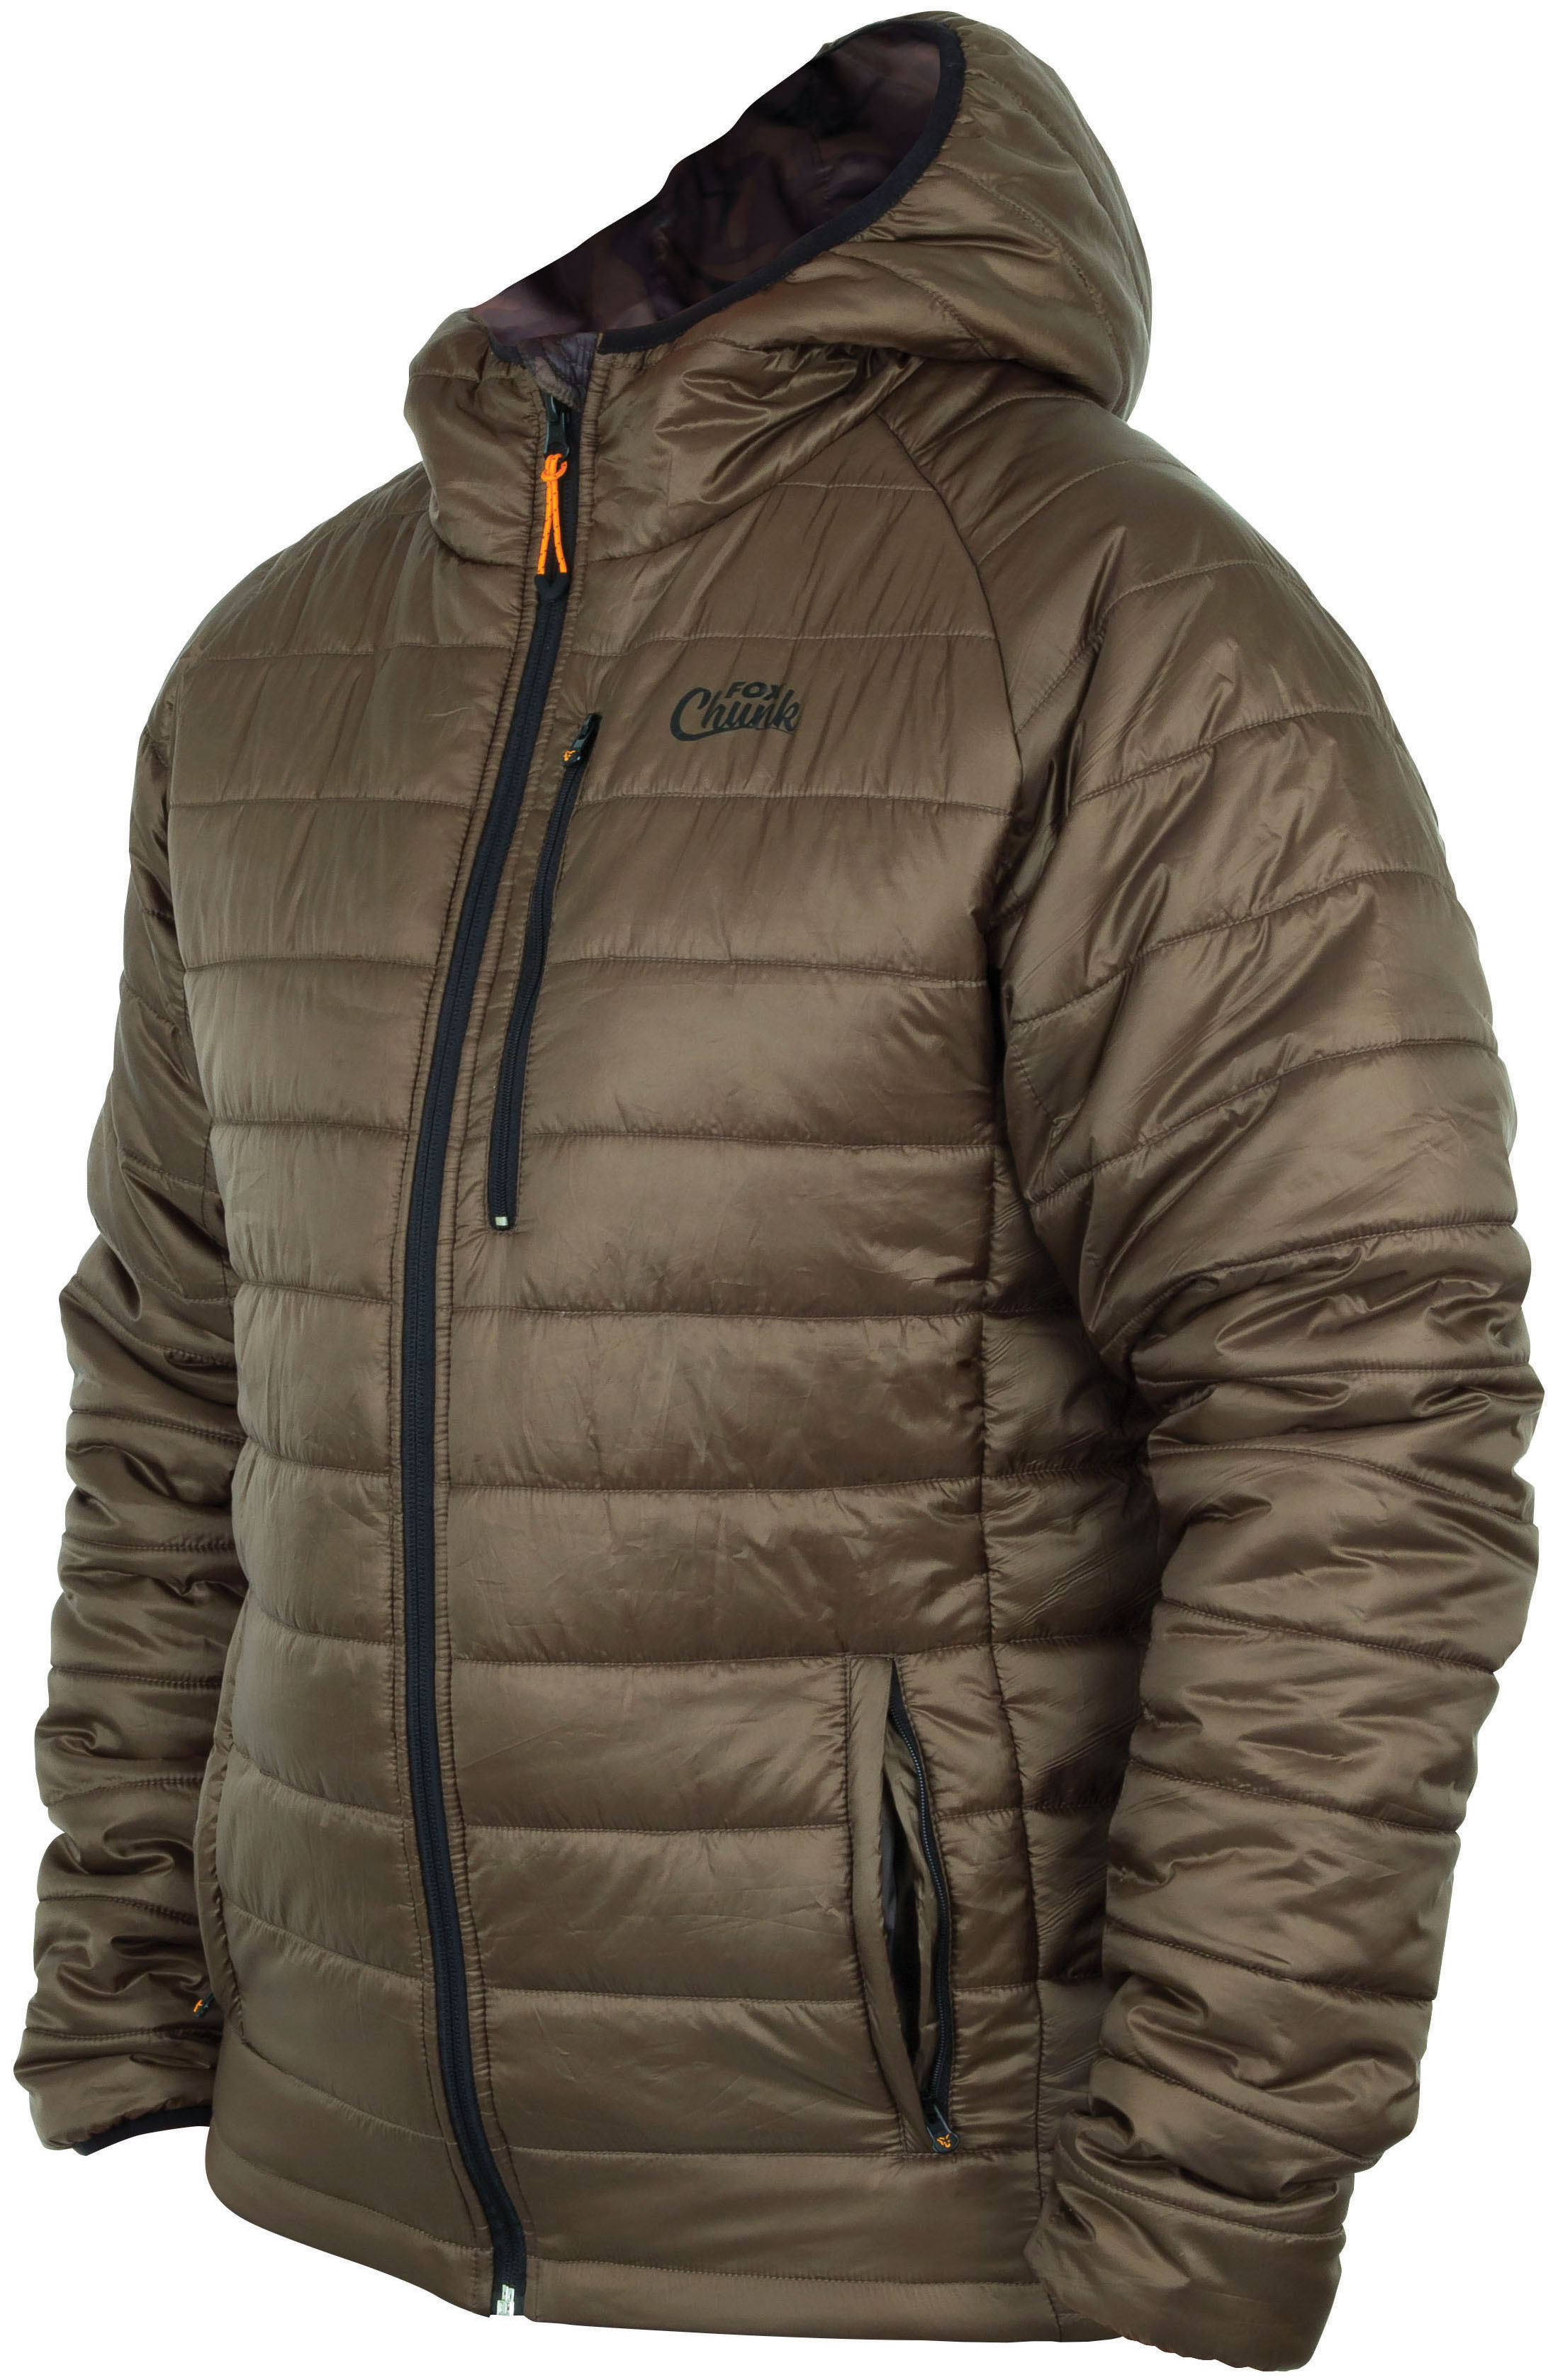 NEW Wychwood Carp Soft Shell Softshell Hooded Jacket Coat Black Fishing xL xxL 